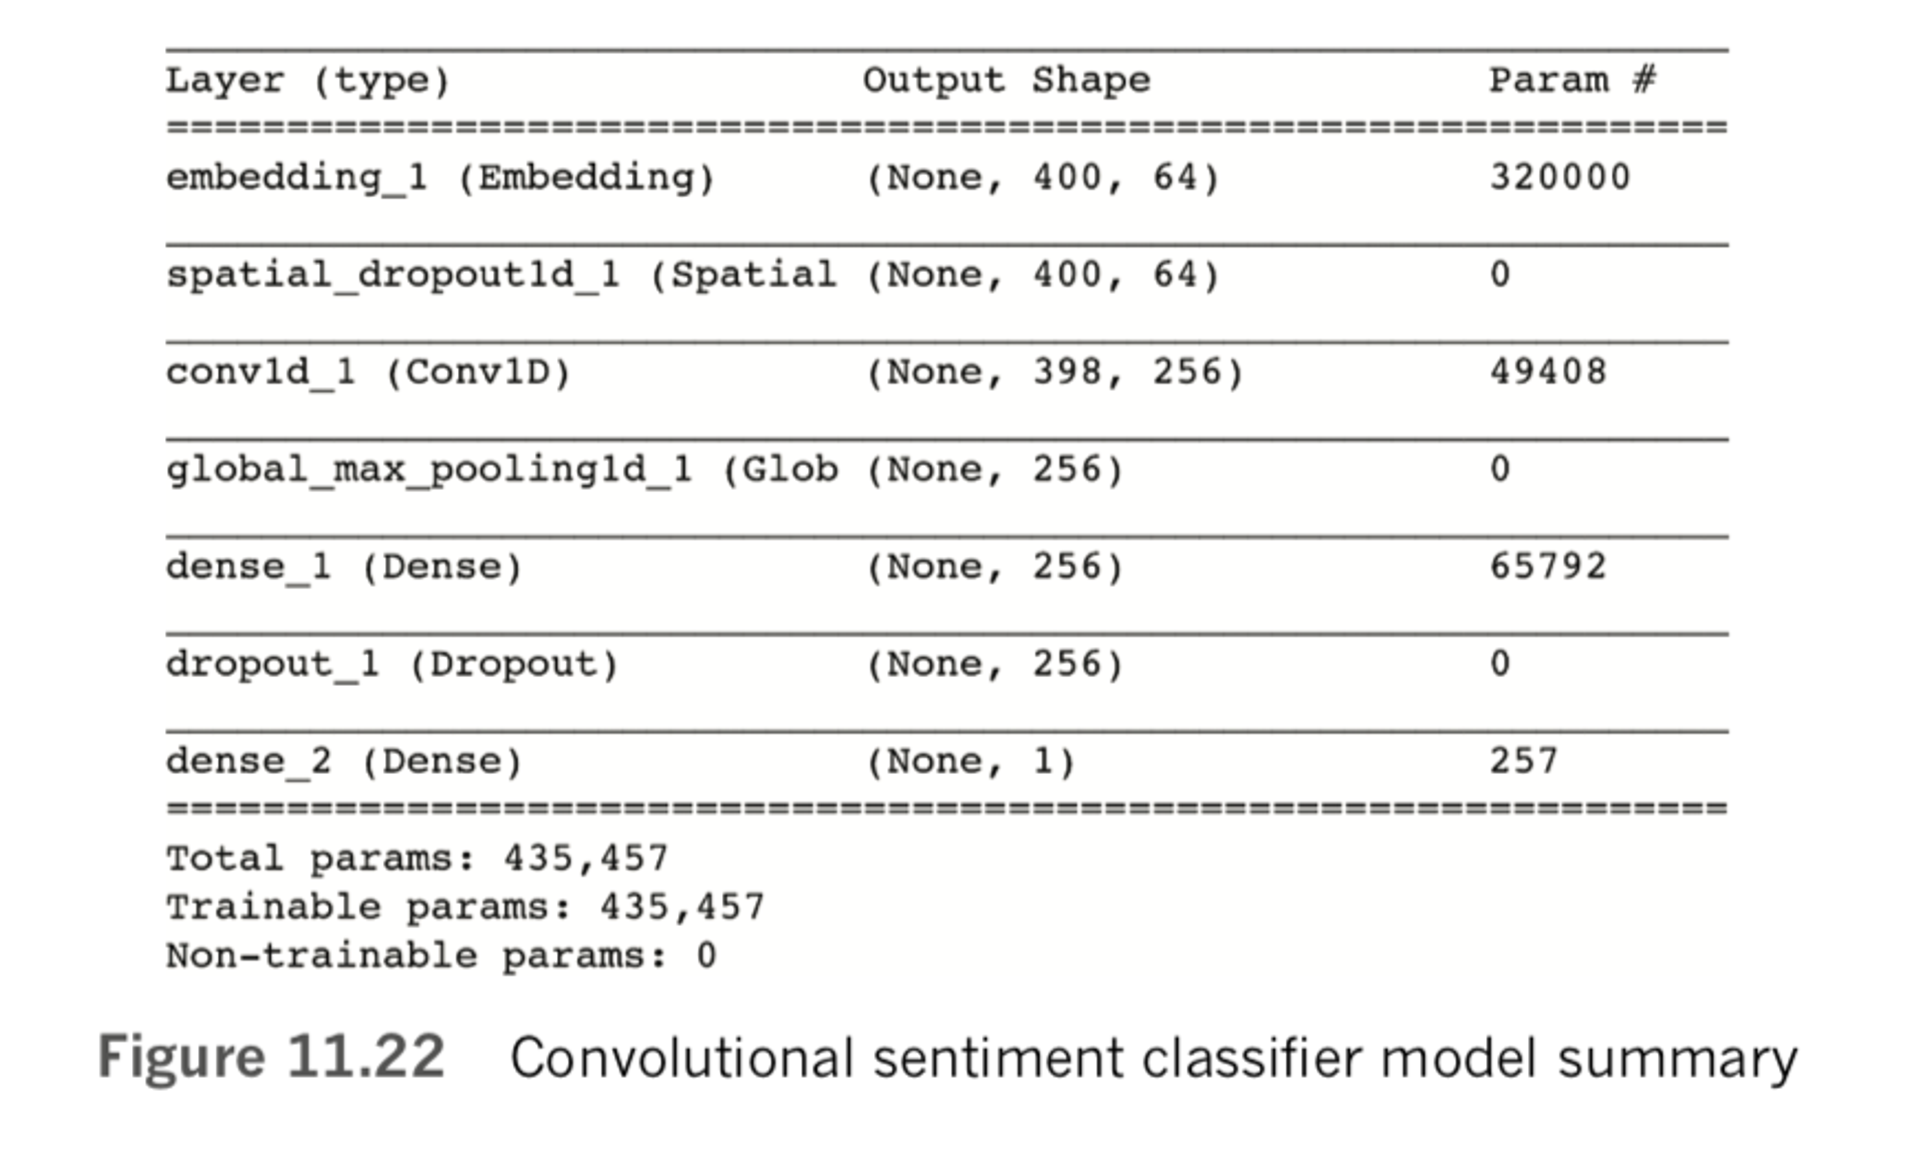 Convolutional sentiment classifier model summary